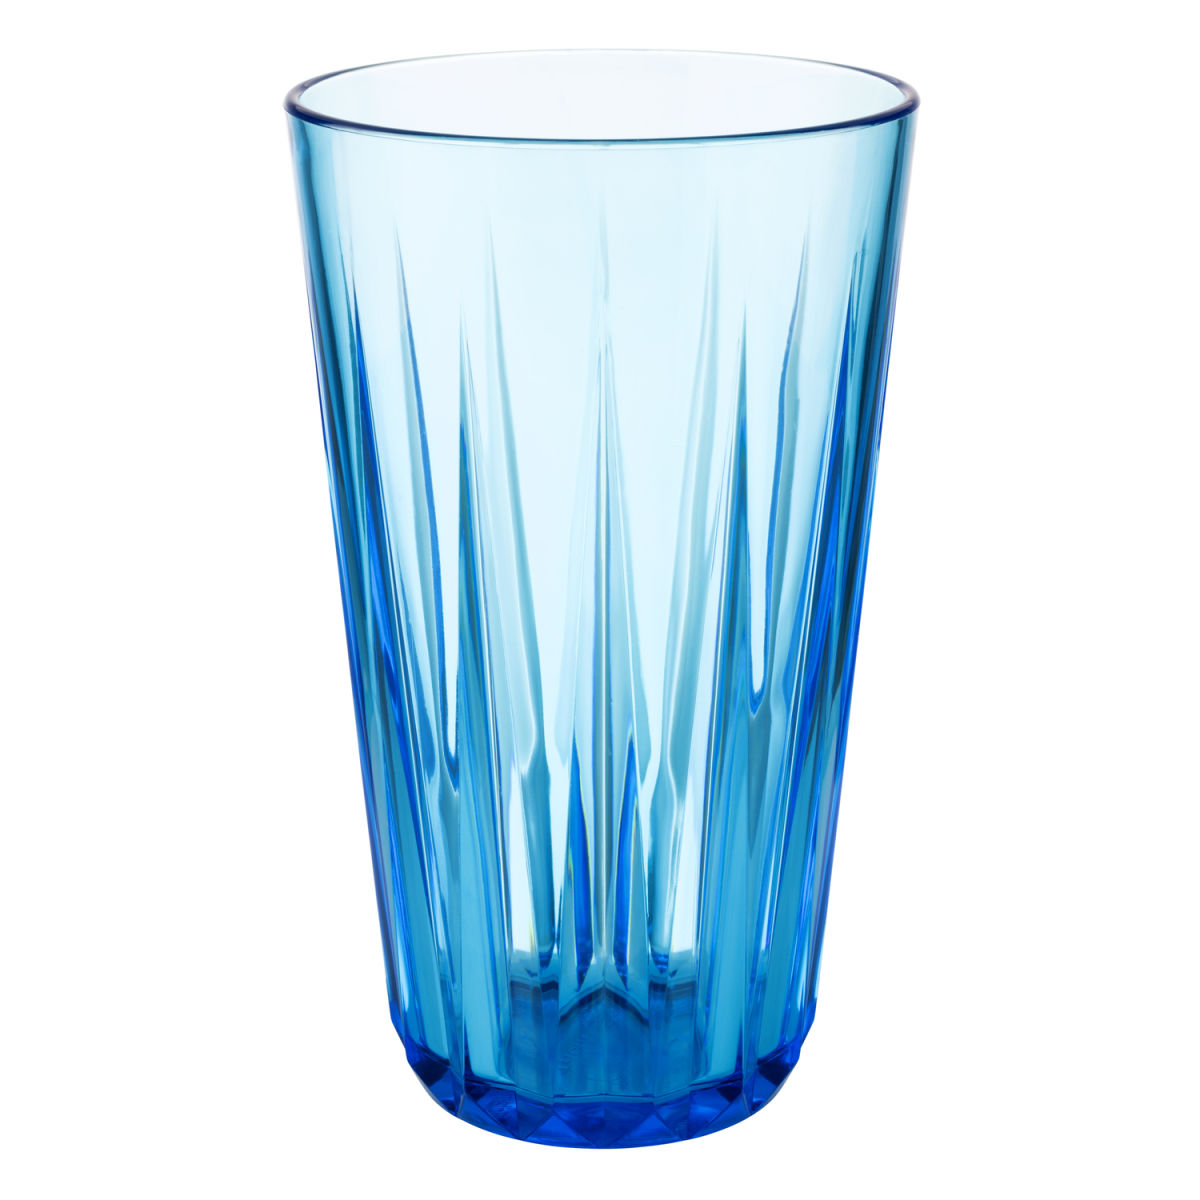 APS Waterglas Crystal; 500ml, 9x15.5 cm (ØxH); blauw